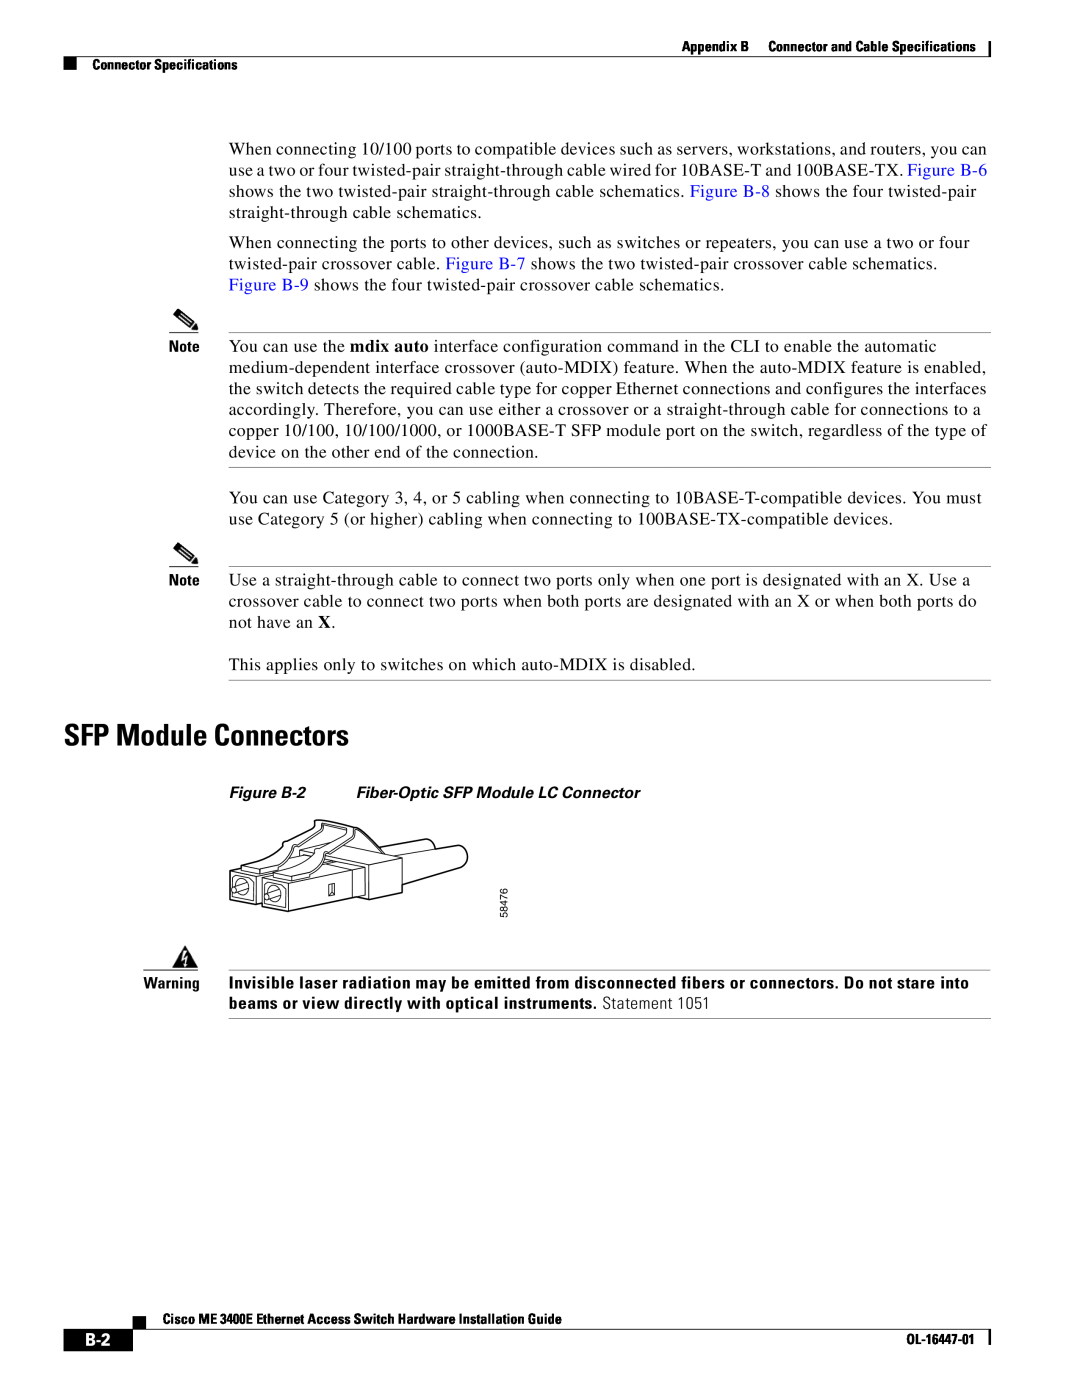 Cisco Systems OL-16447-01 manual SFP Module Connectors 